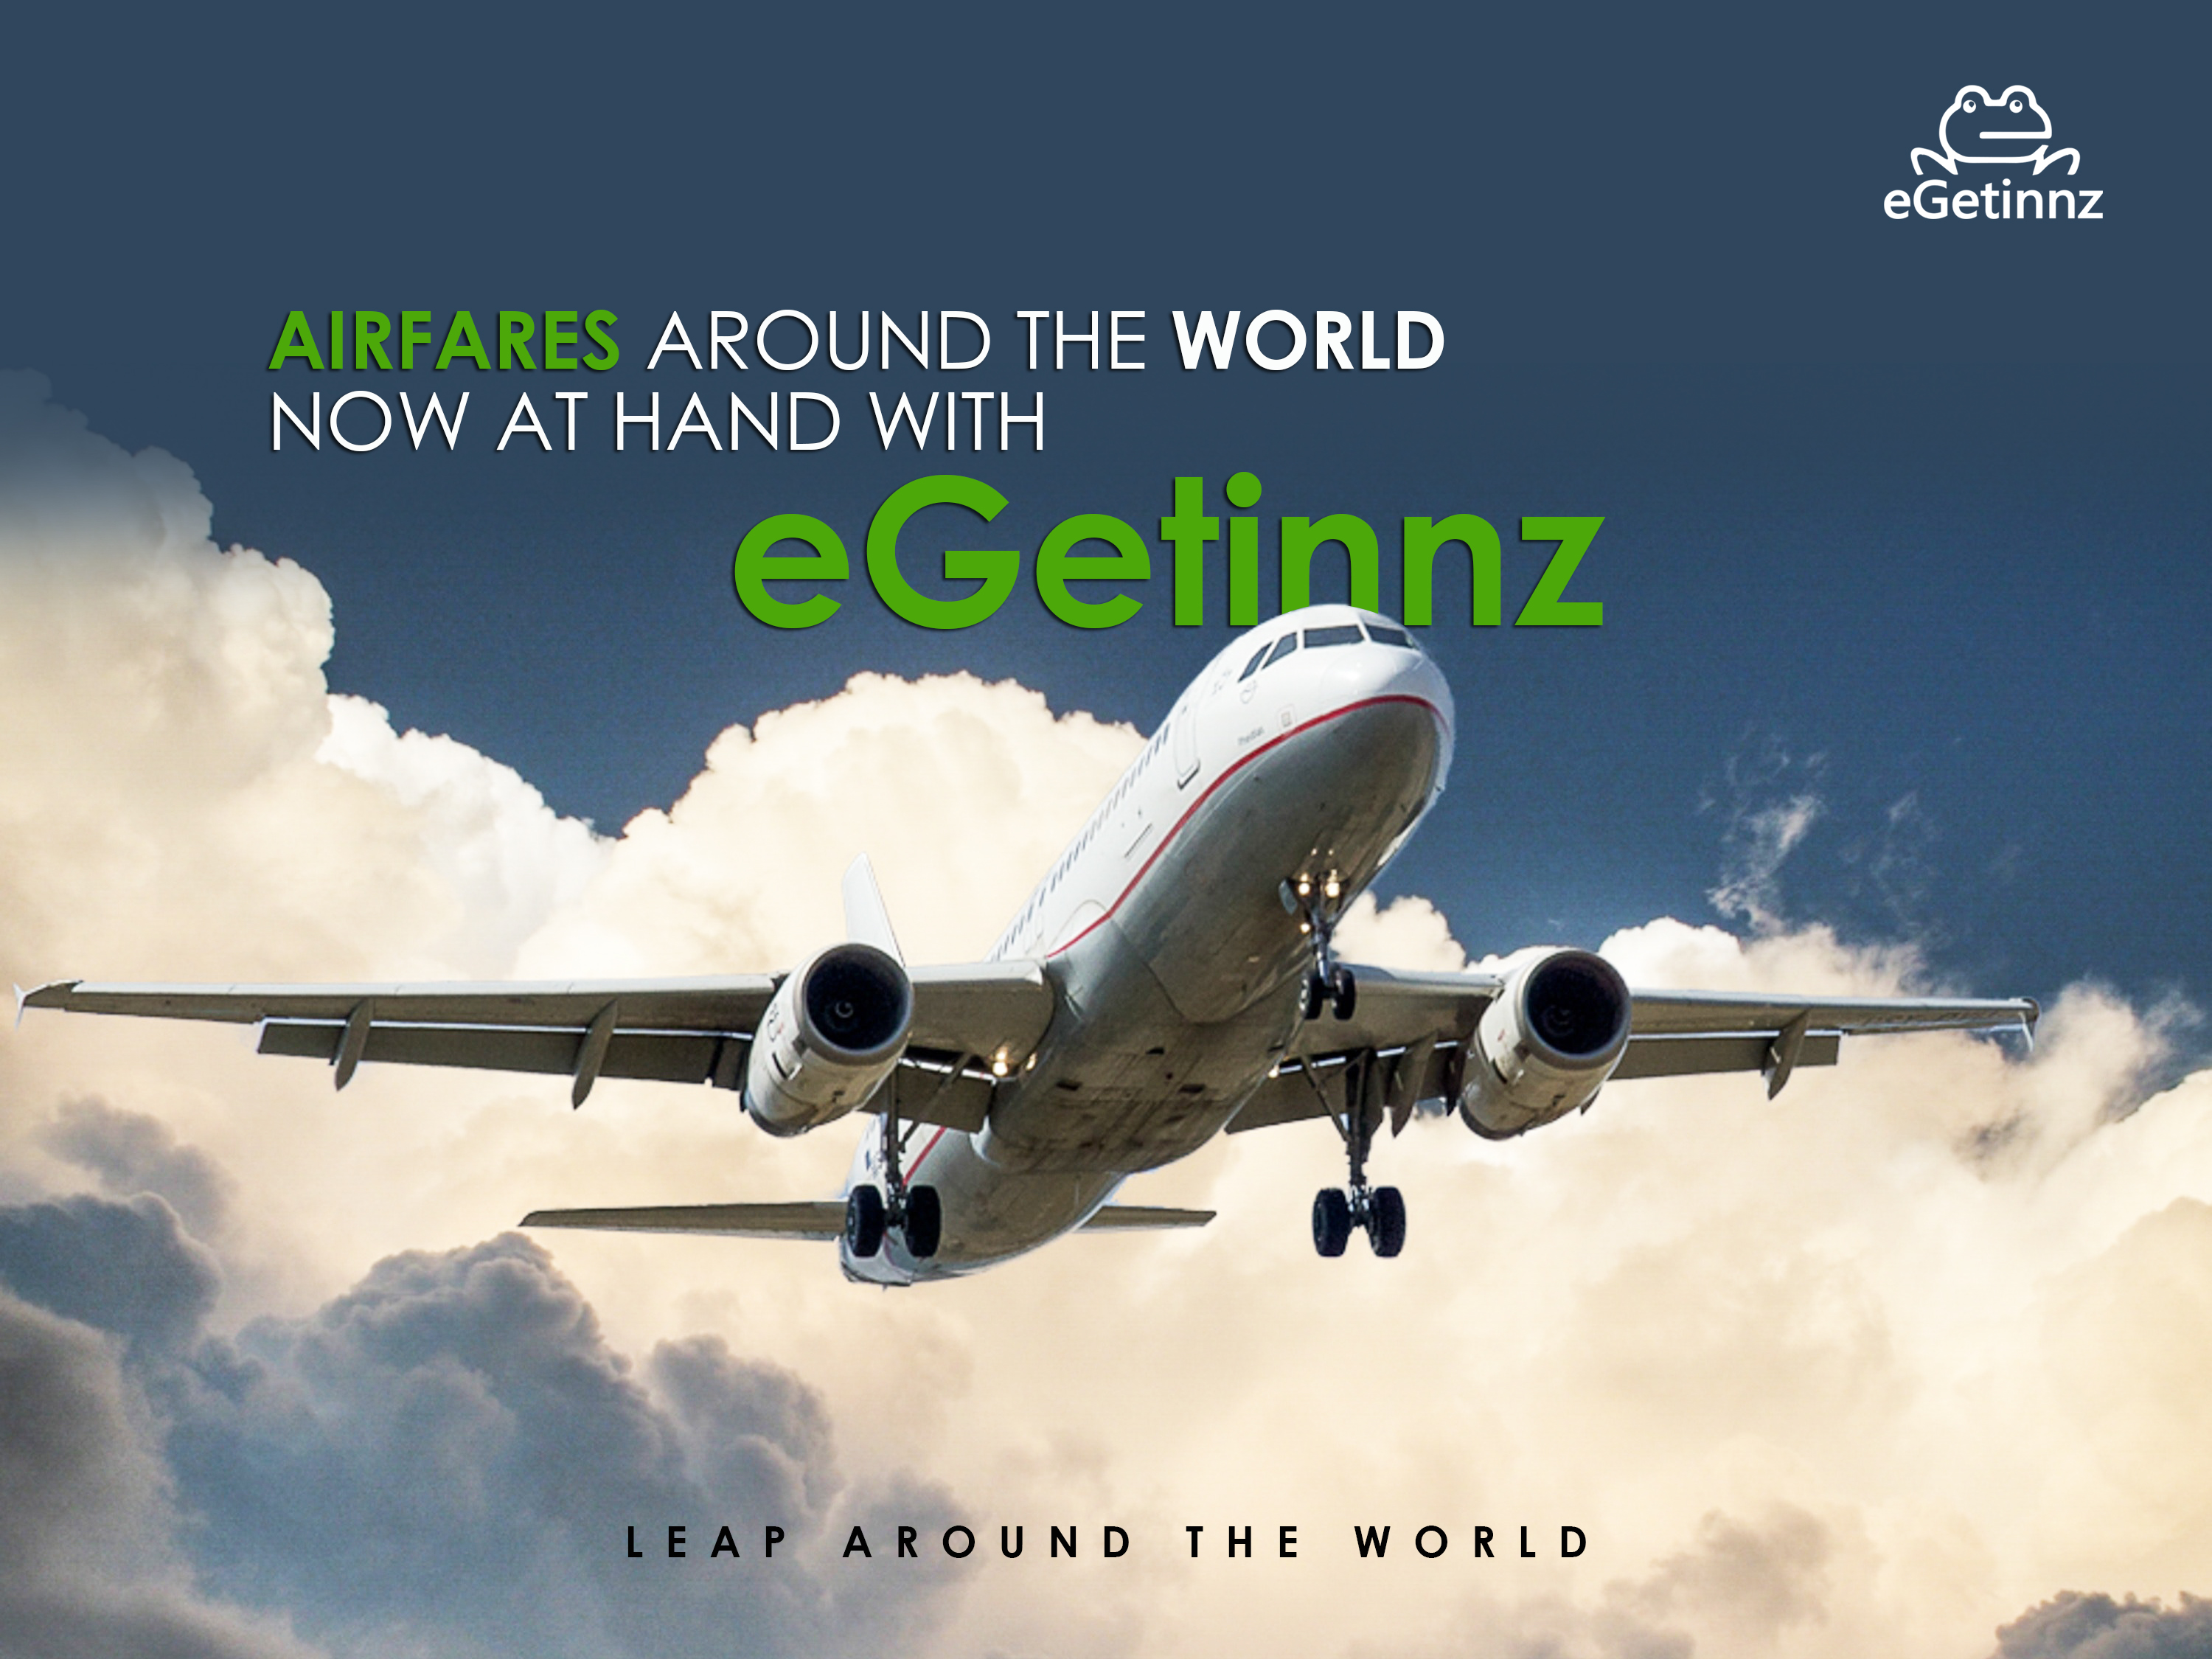 Airfares Around the World Now at Hand with eGetinnz